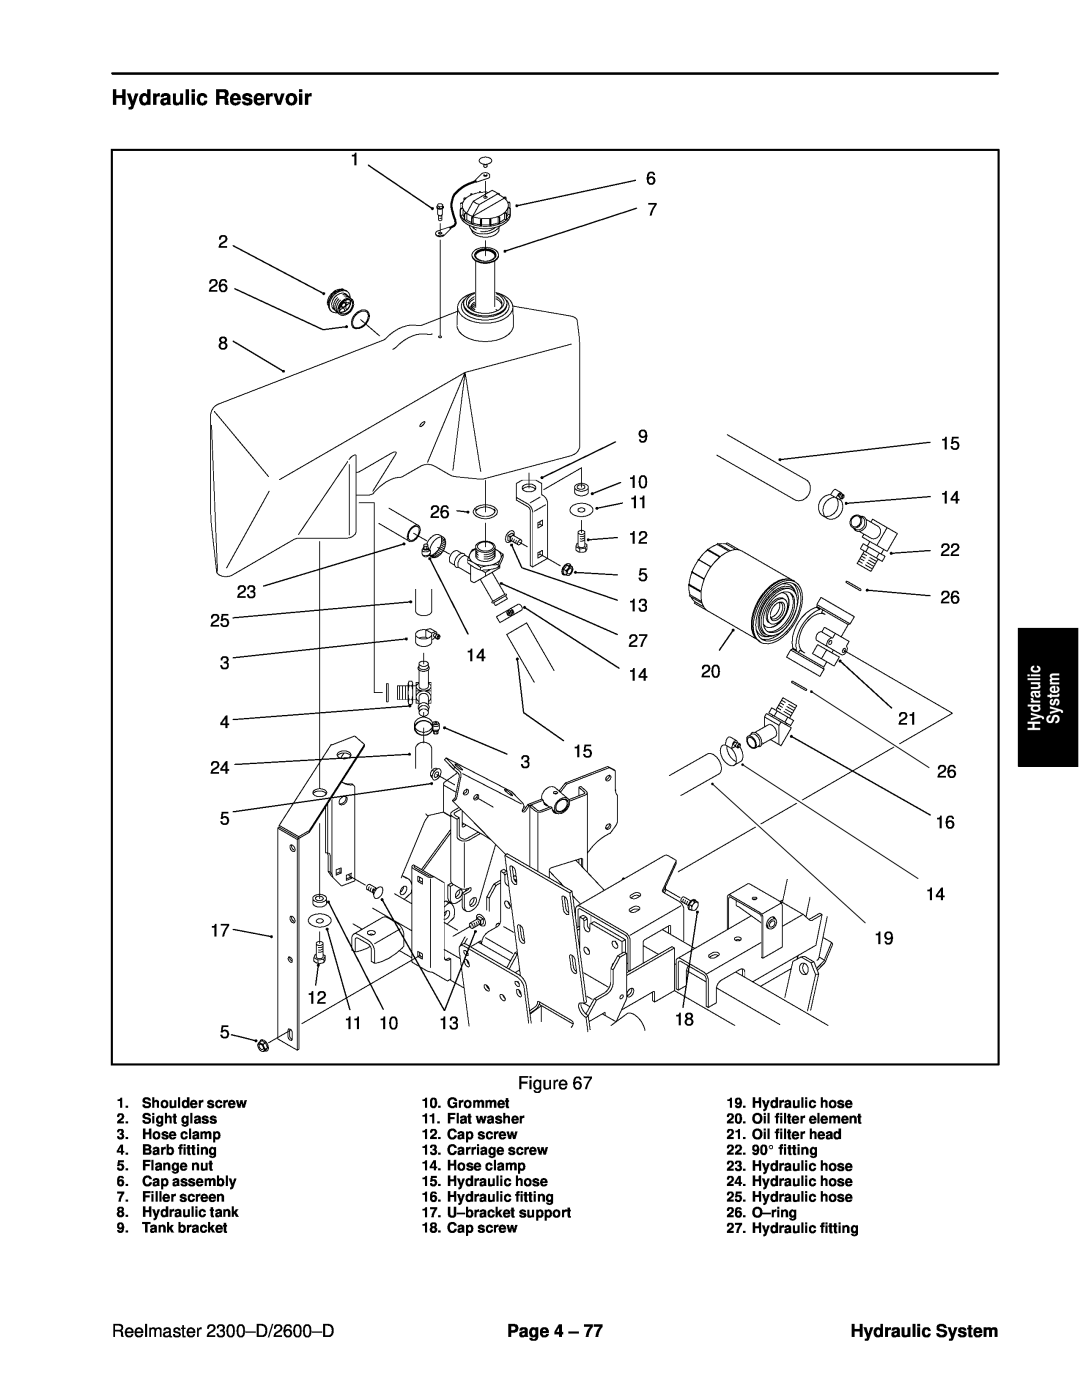 Toro 2600D, 2300-D service manual Hydraulic Reservoir, Reelmaster 2300±D/2600±D, Page 4 ±, Hydraulic System 